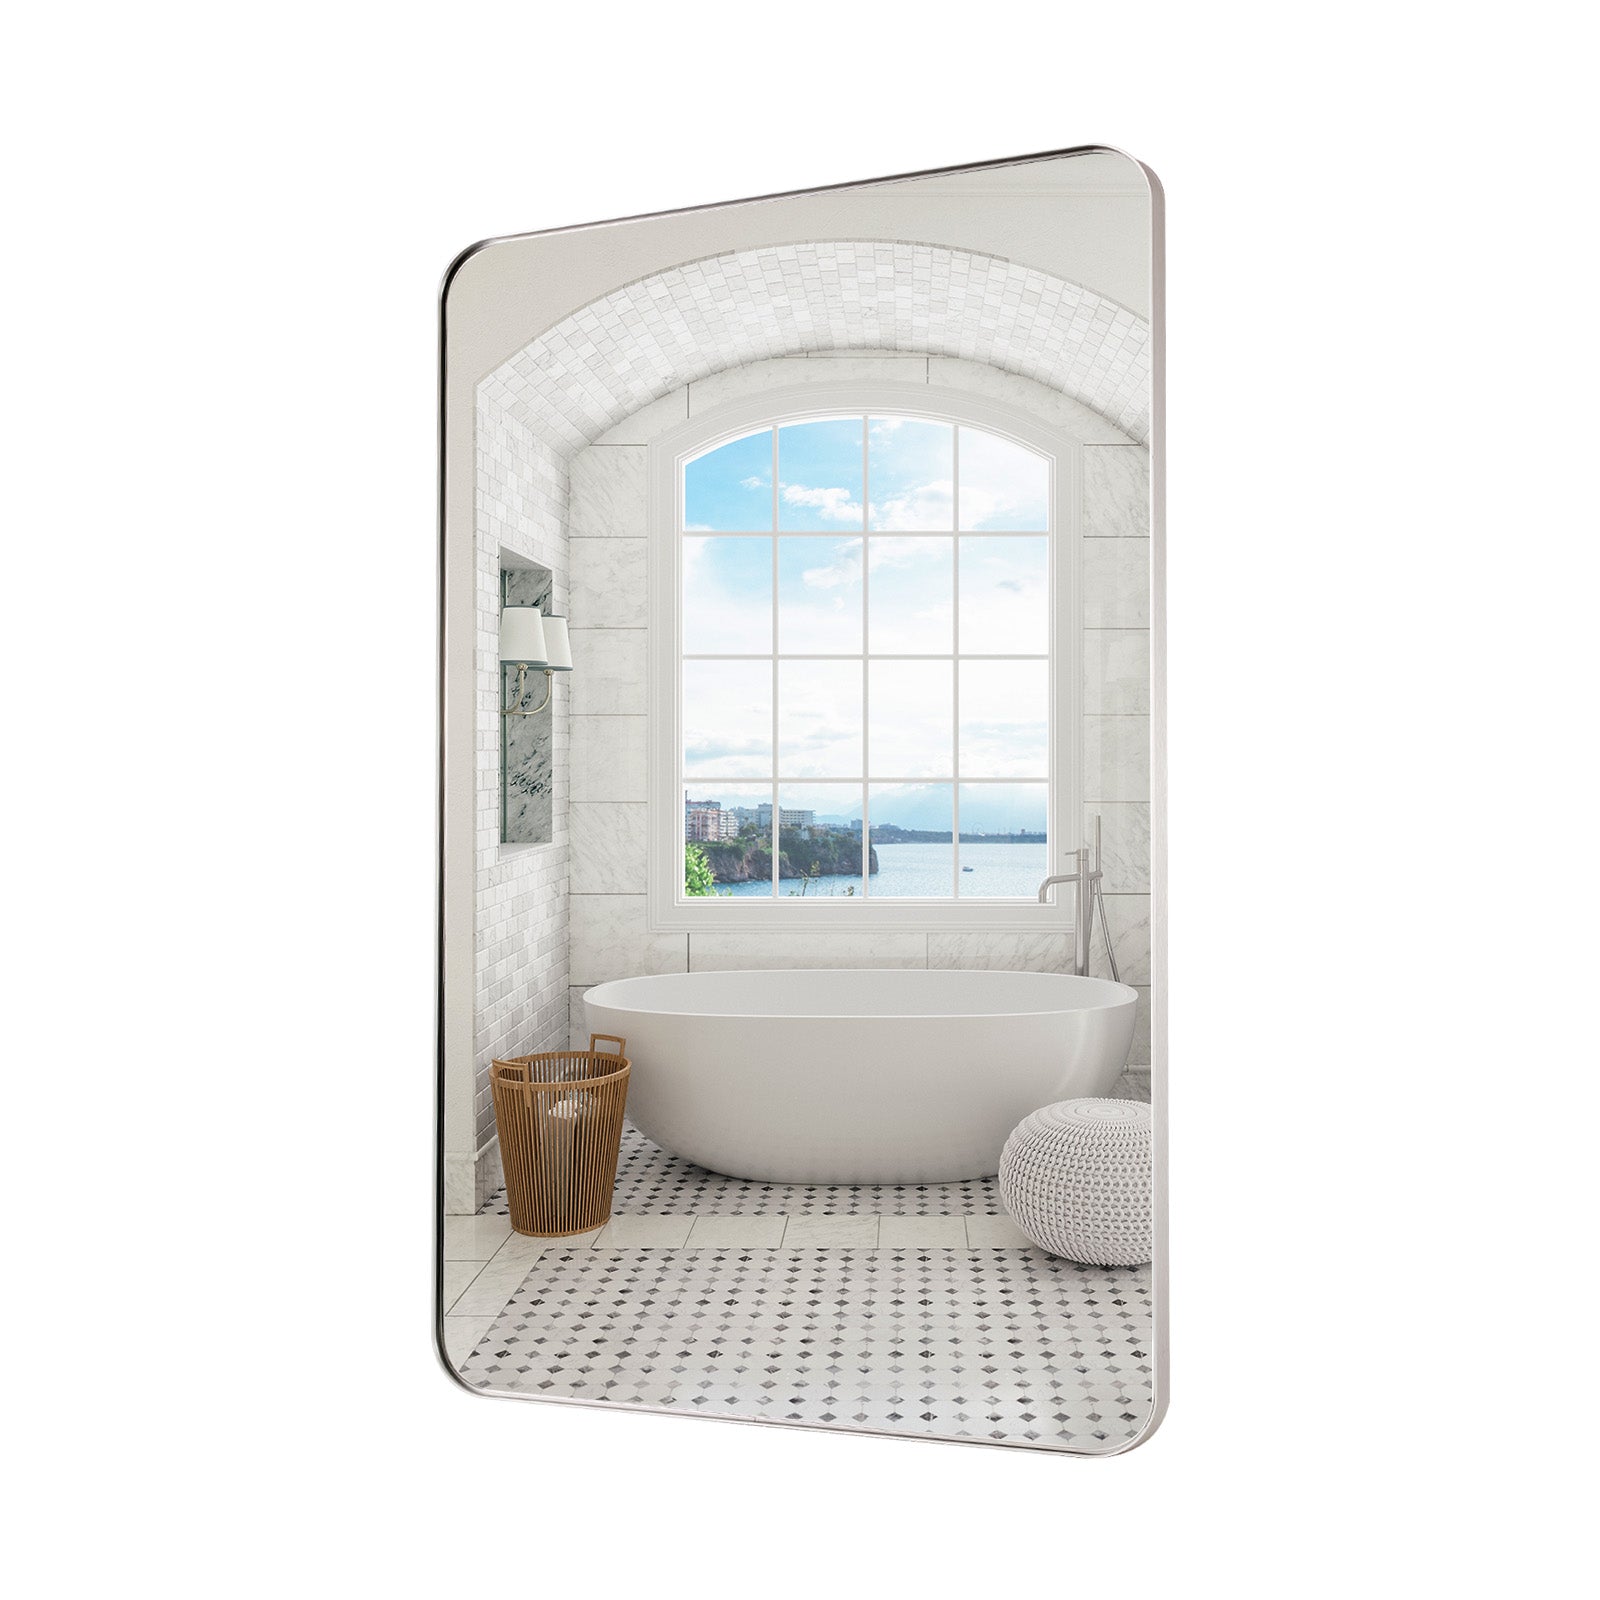 Luxury Rounded Rectangular Bathroom Mirrors with Aluminum Framed